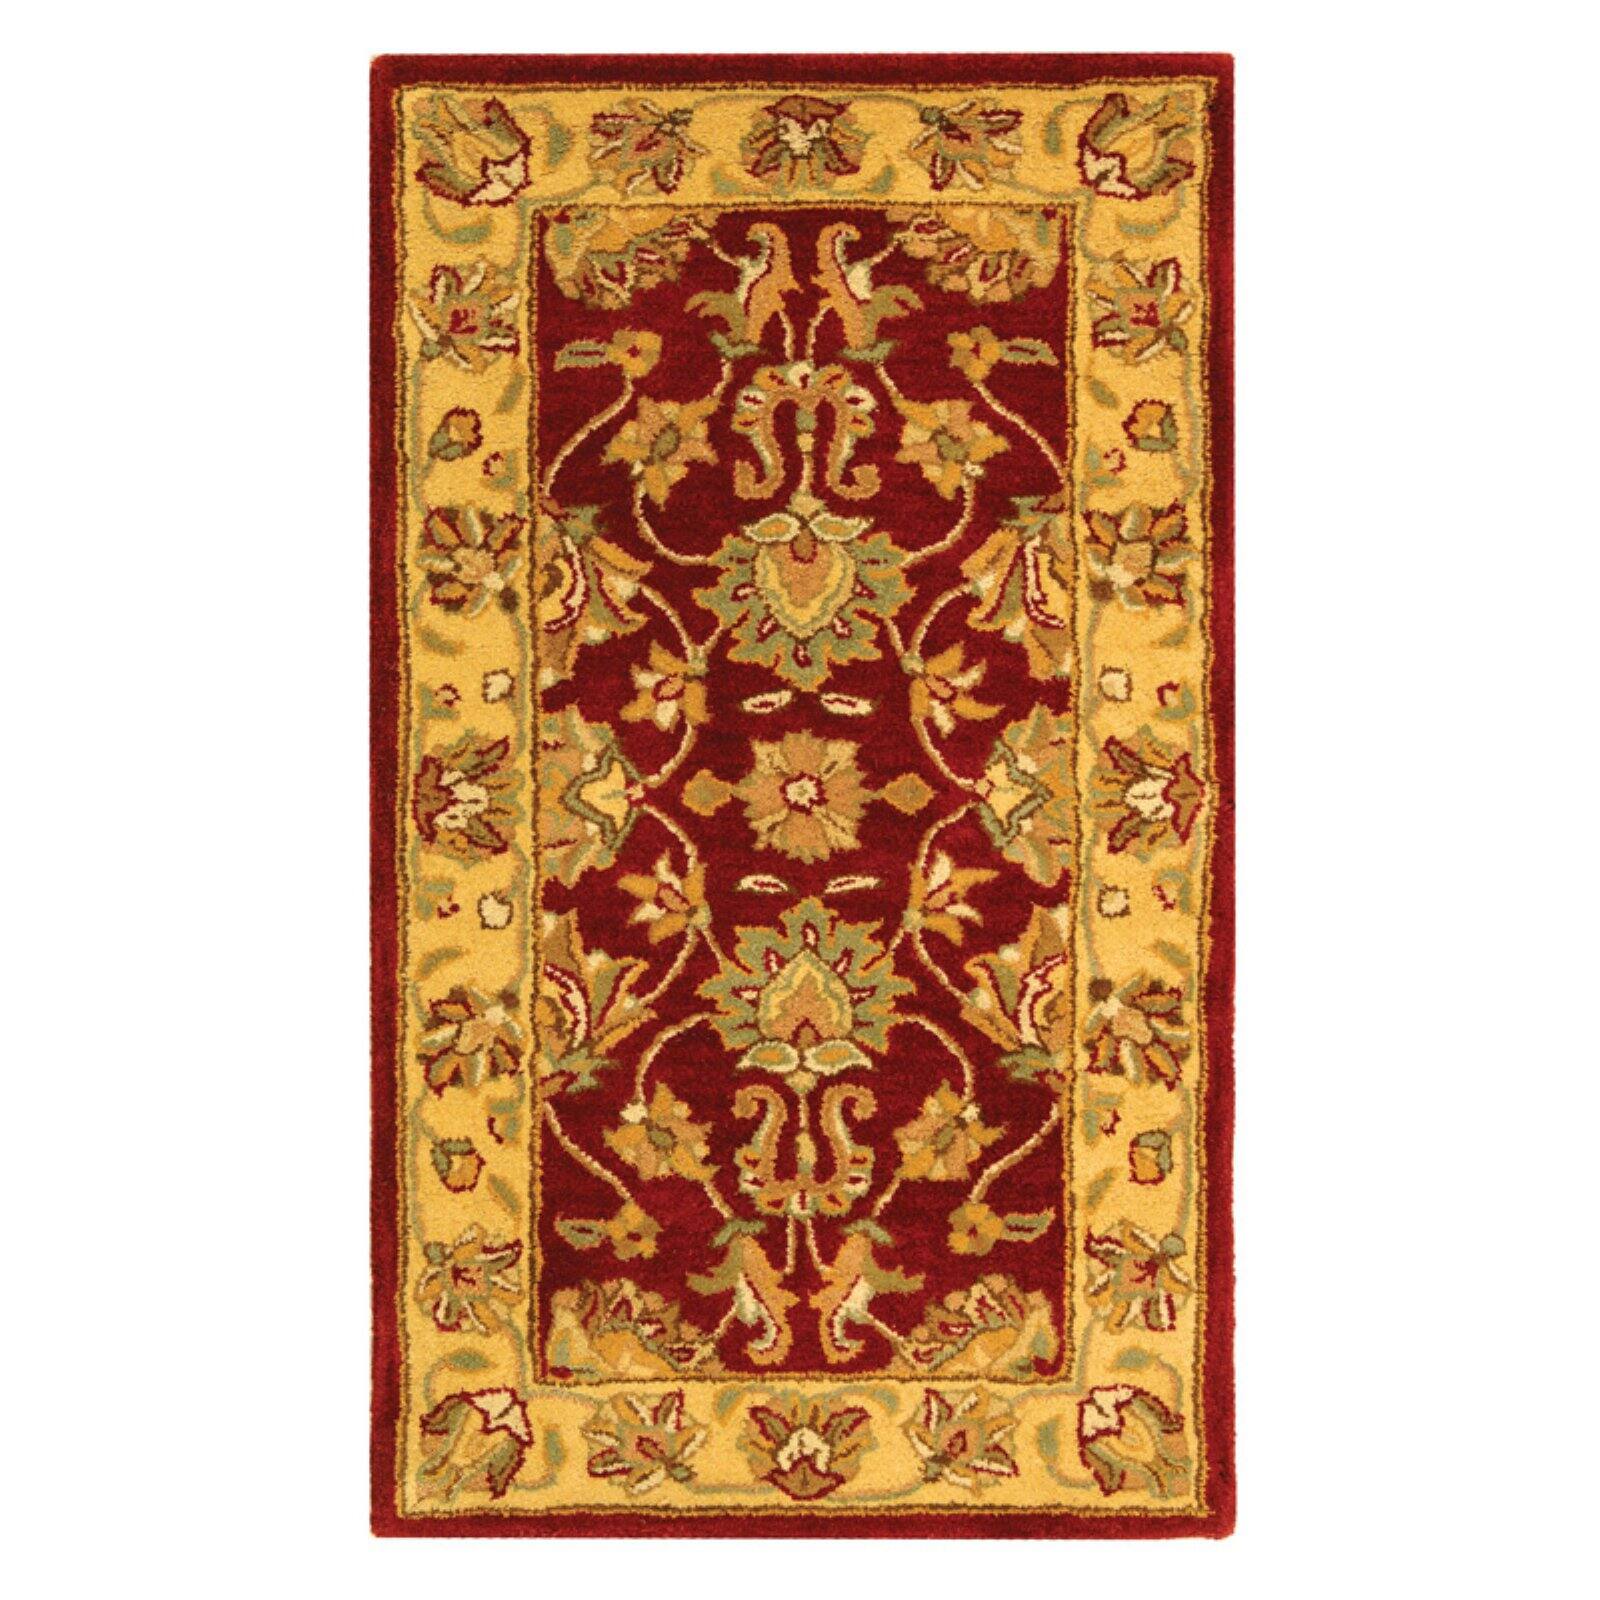 SAFAVIEH Heritage Regis Traditional Wool Runner Rug, Red/Gold, 2'3" x 14' - image 2 of 9